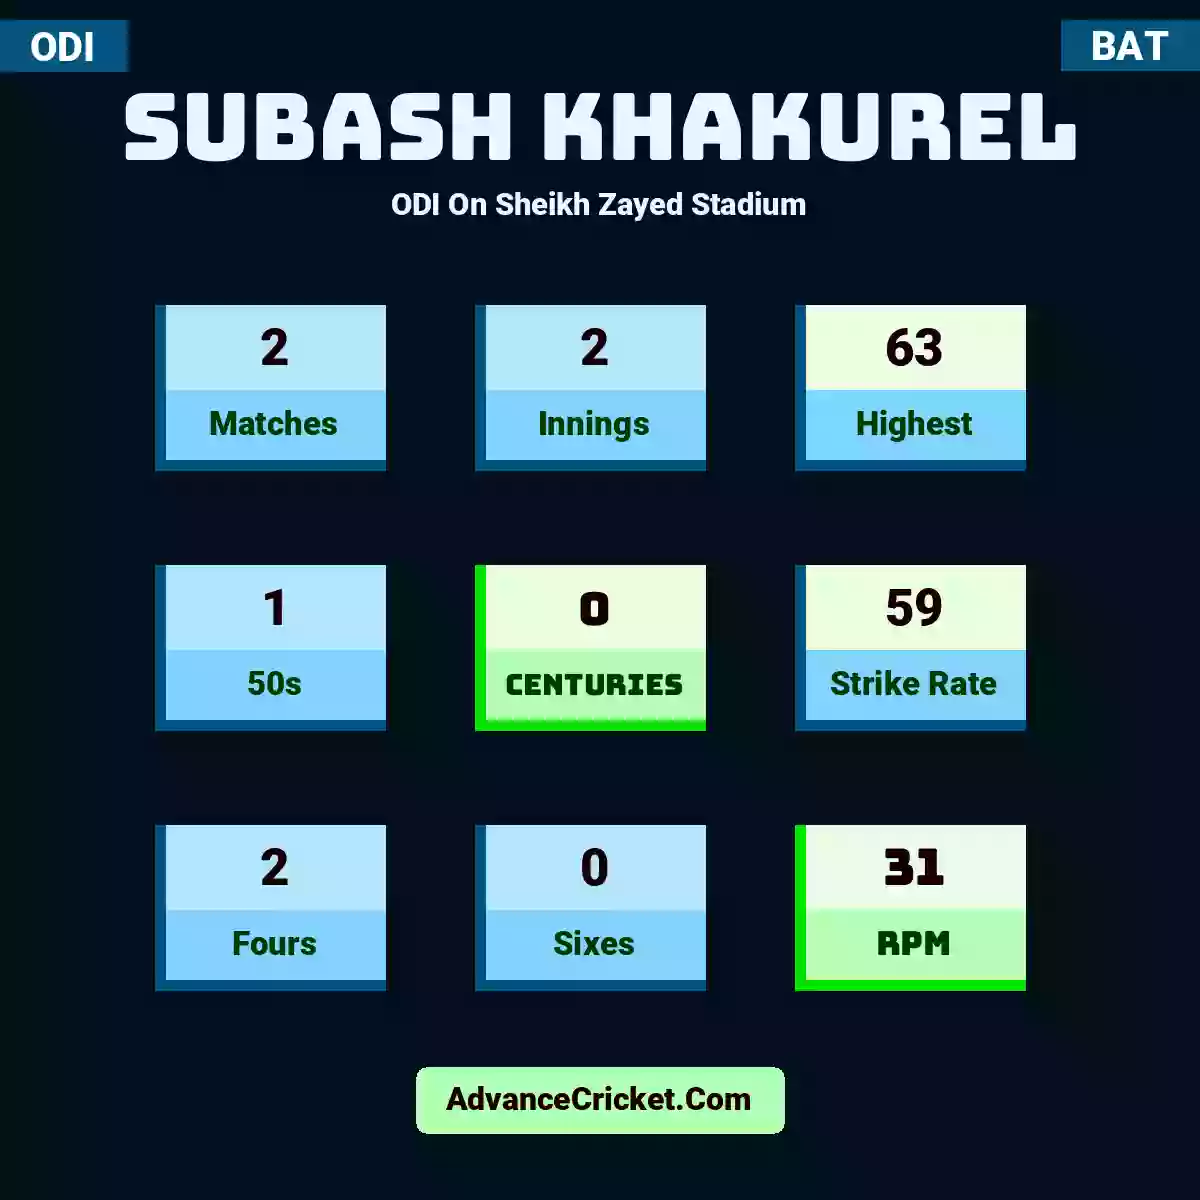 Subash Khakurel ODI  On Sheikh Zayed Stadium, Subash Khakurel played 2 matches, scored 63 runs as highest, 1 half-centuries, and 0 centuries, with a strike rate of 59. S.Khakurel hit 2 fours and 0 sixes, with an RPM of 31.